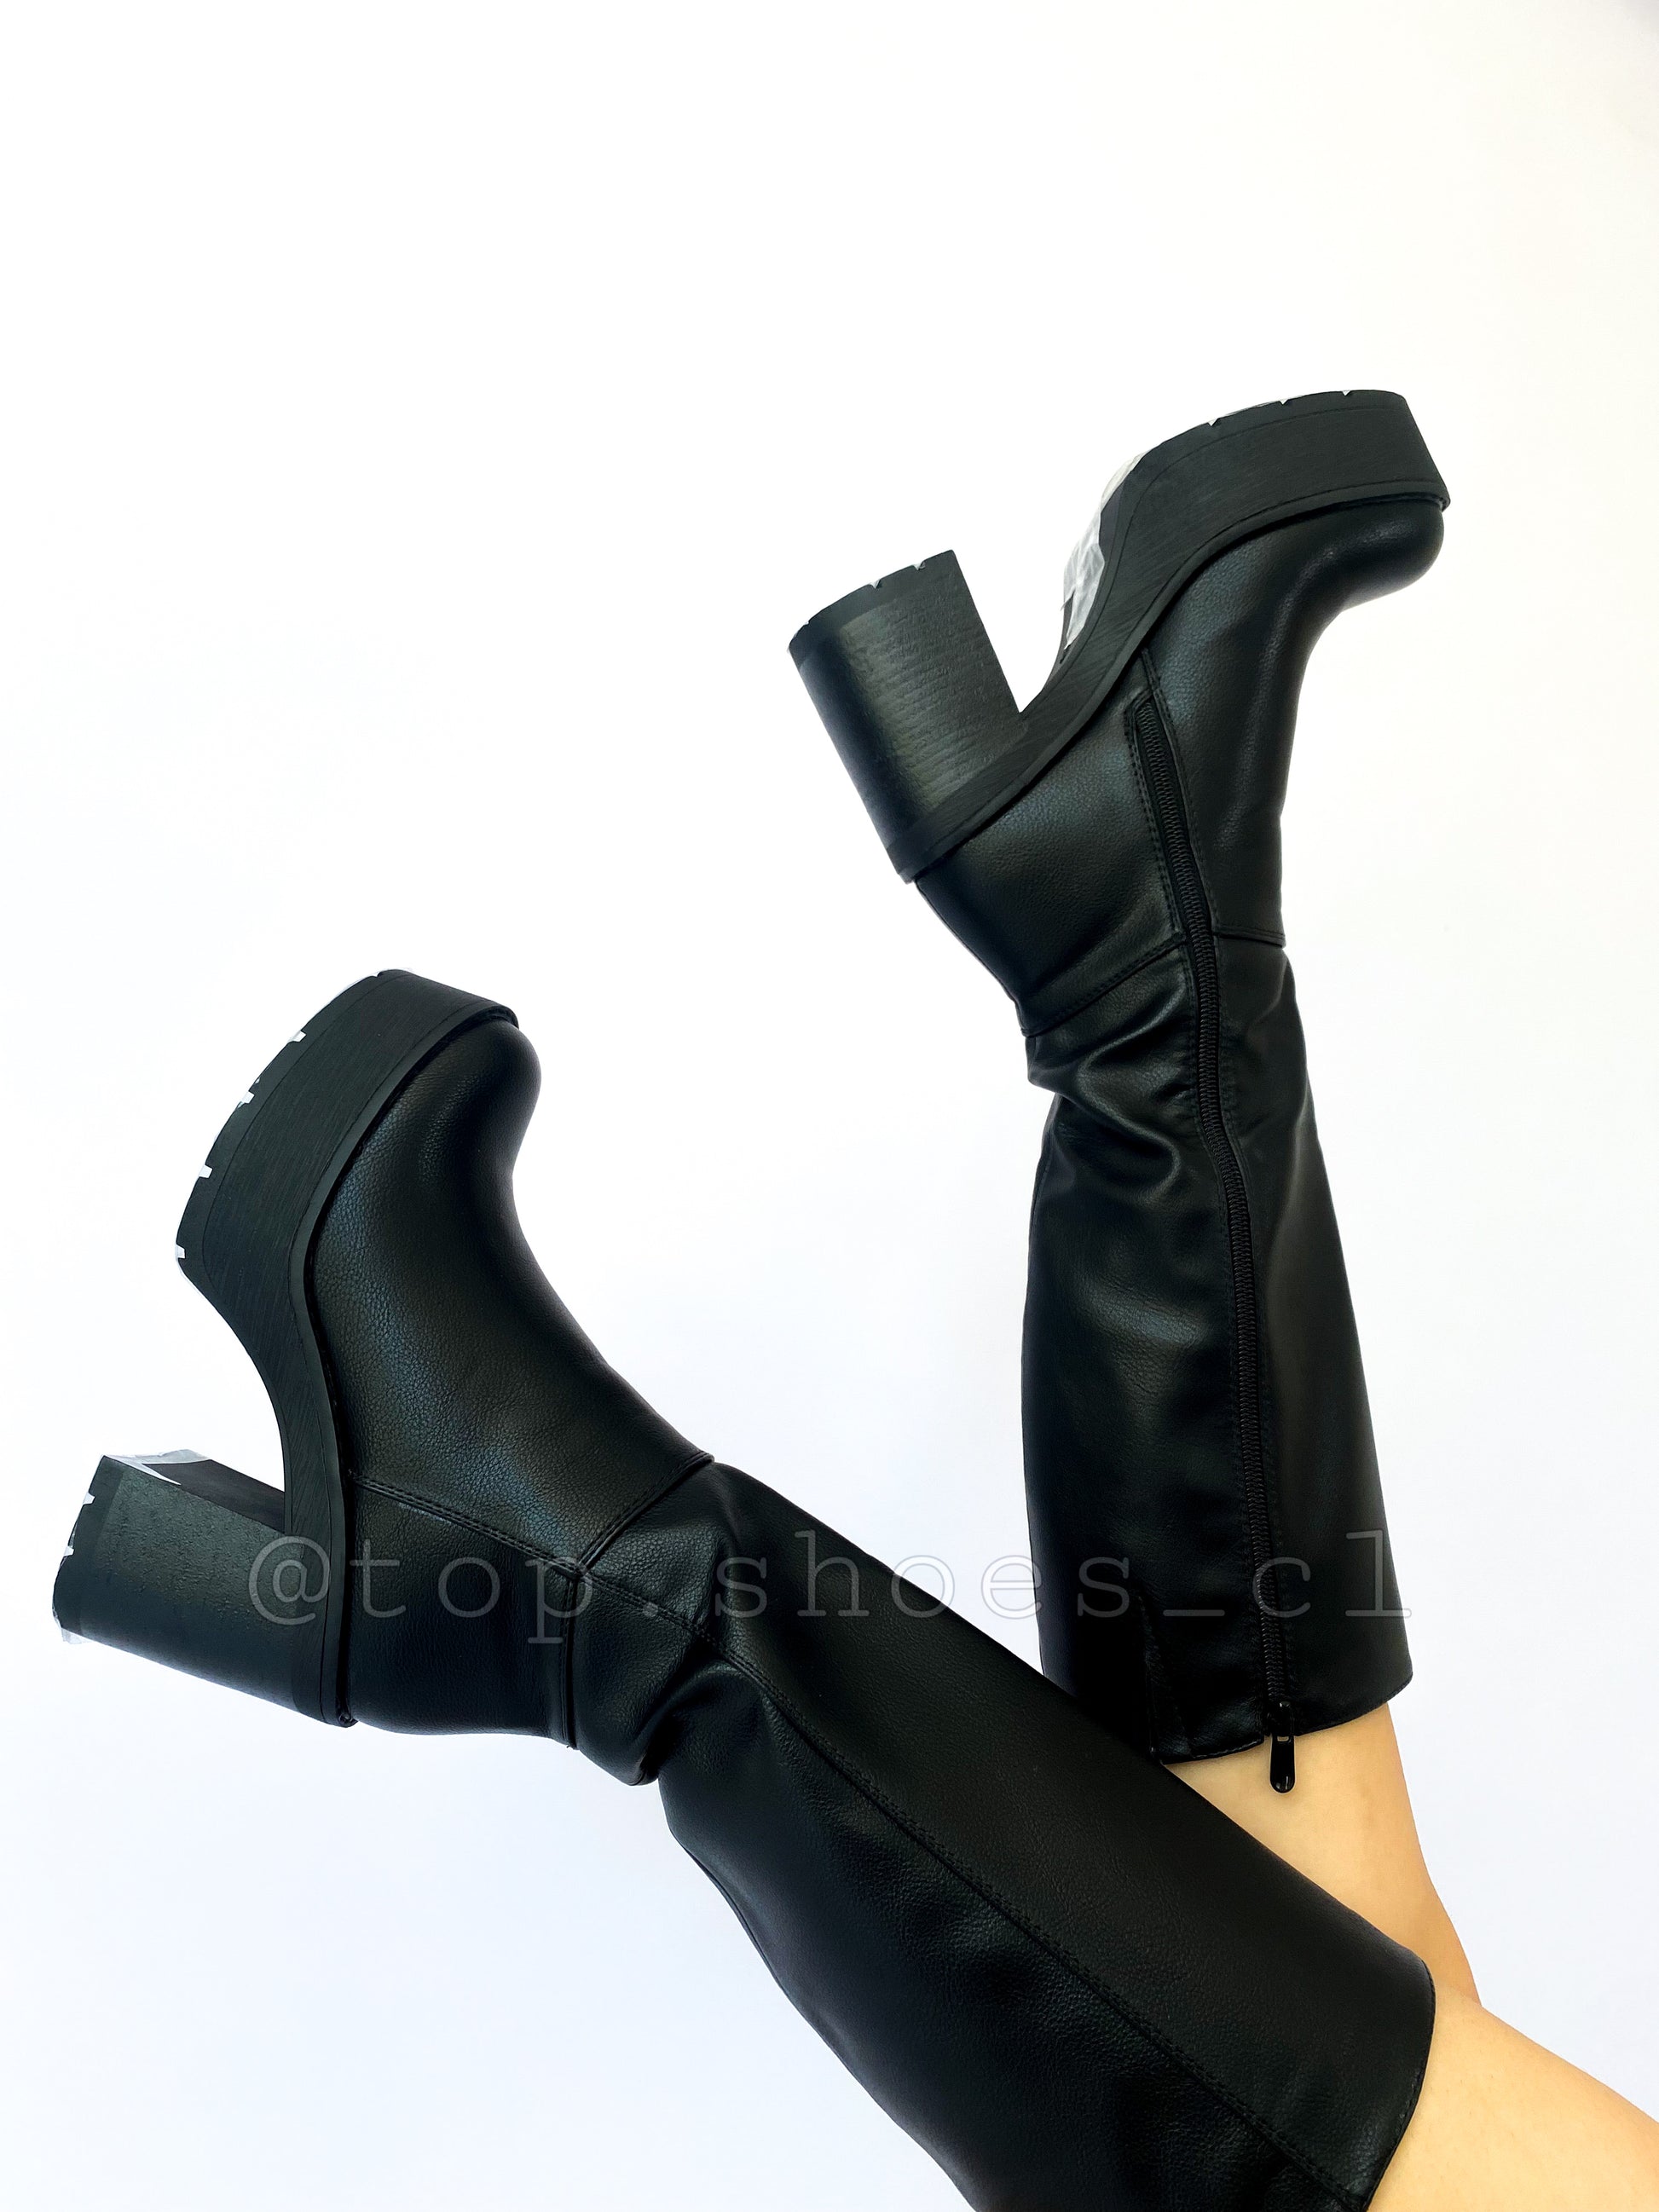 Jane black - Topshoes